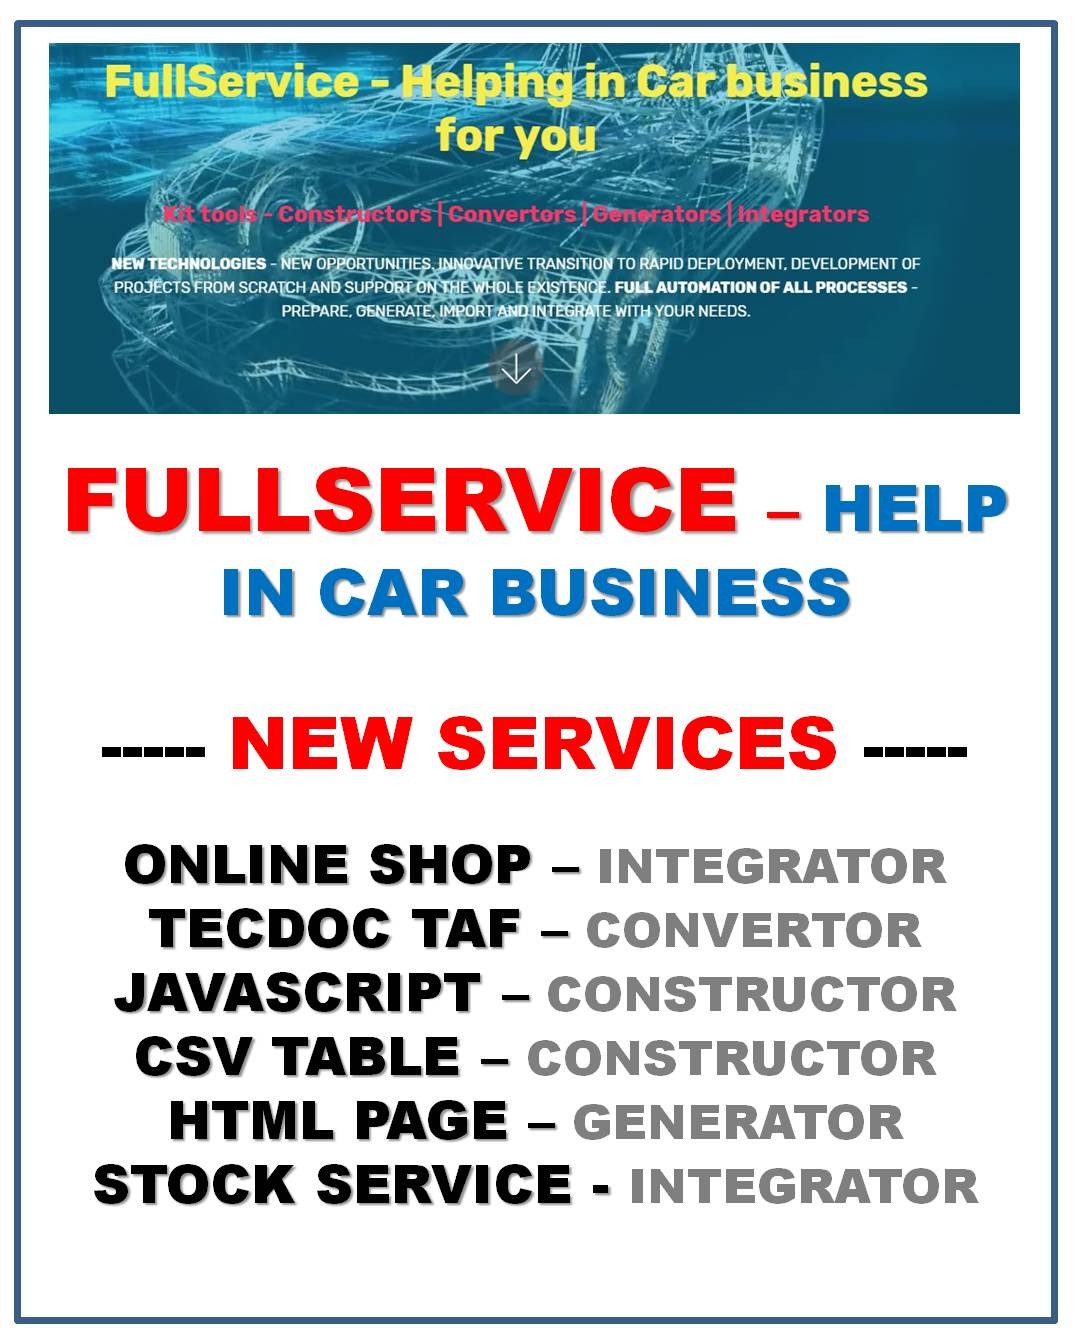 FullService - help in Car business